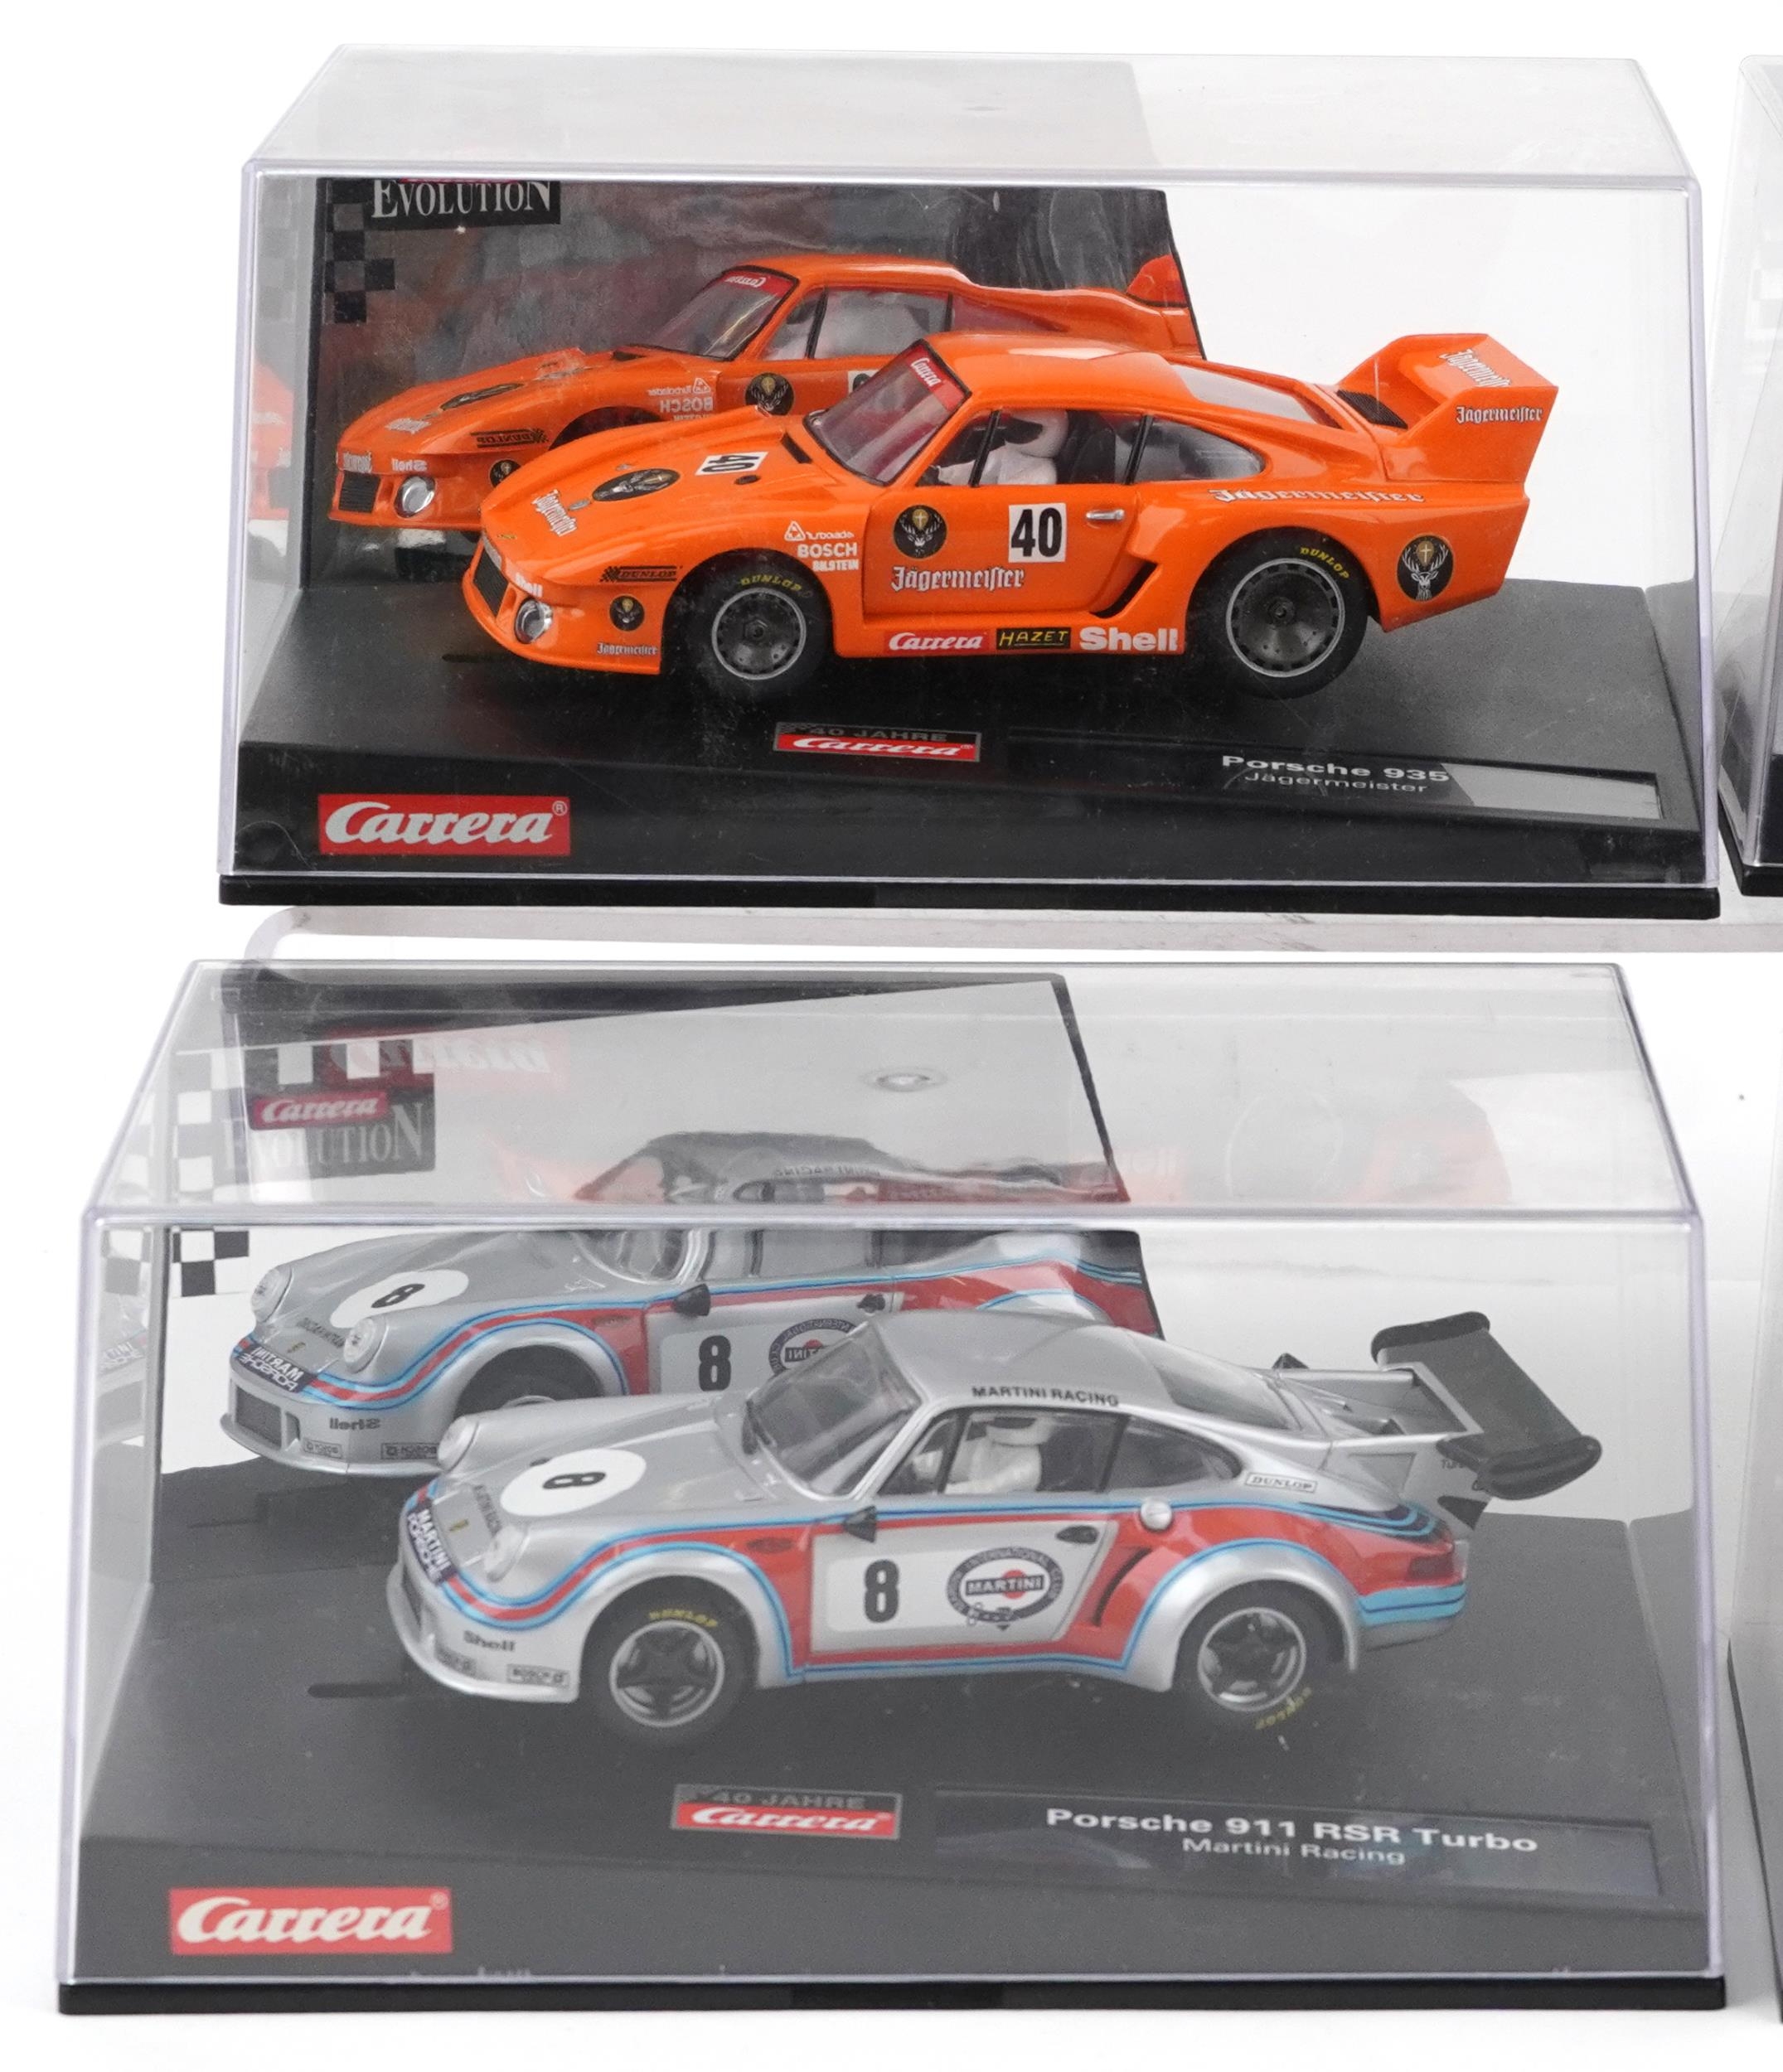 Six Carrera Evolution slot cars with cases comprising Porsche 935, Aston Martin V12 Vanquis, Audi A4 - Image 2 of 3